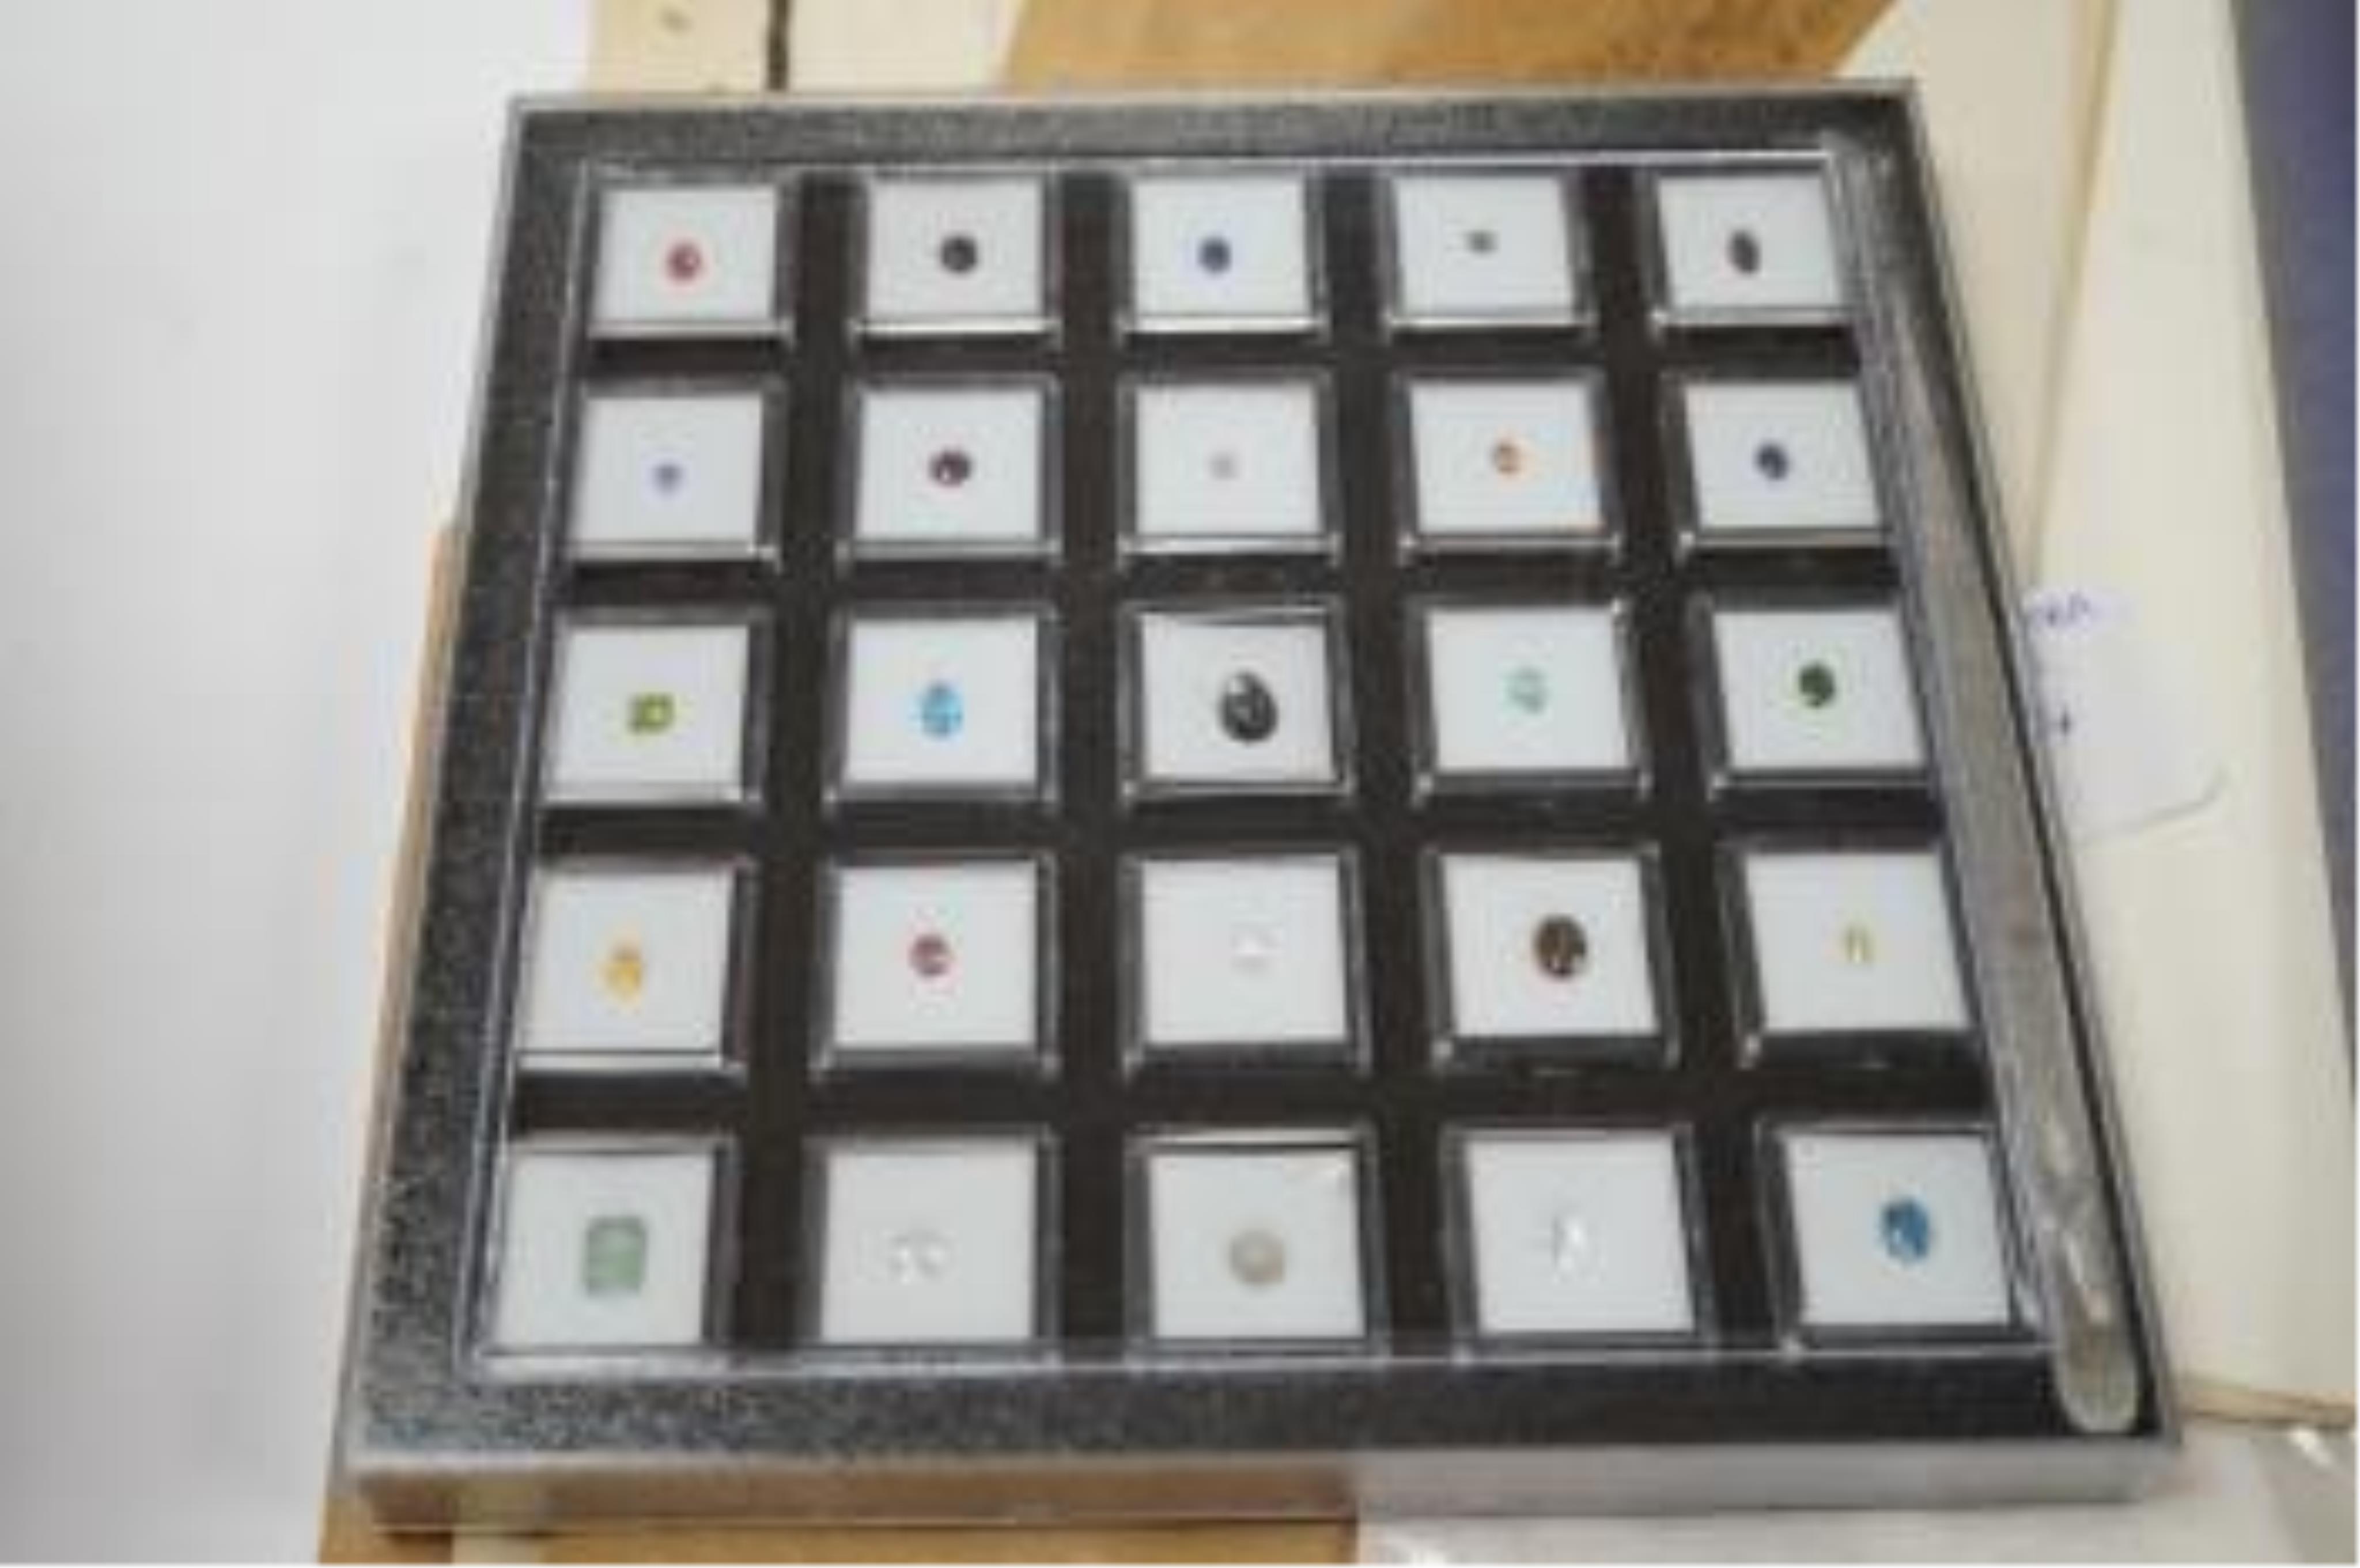 Three boxes containing unmounted cut gemstones including topaz, citrine, peridot, zircon, moonstone, etc. Fair condition.